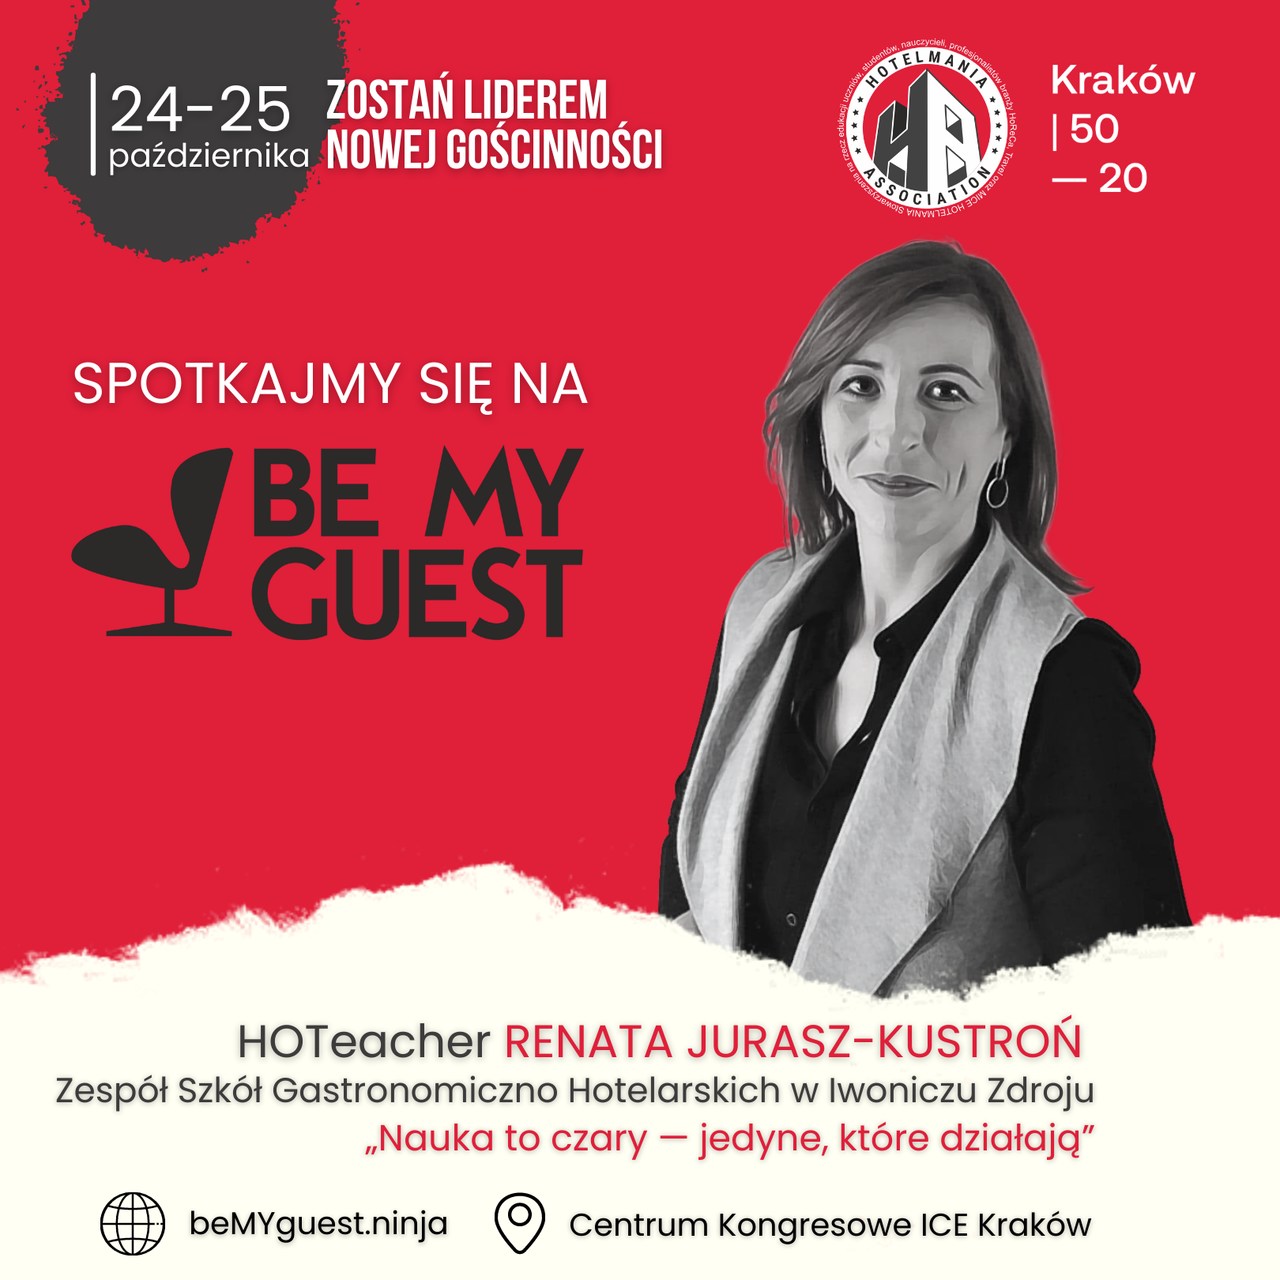 Be my Guest hoteacher Renata Jurasz Kustron